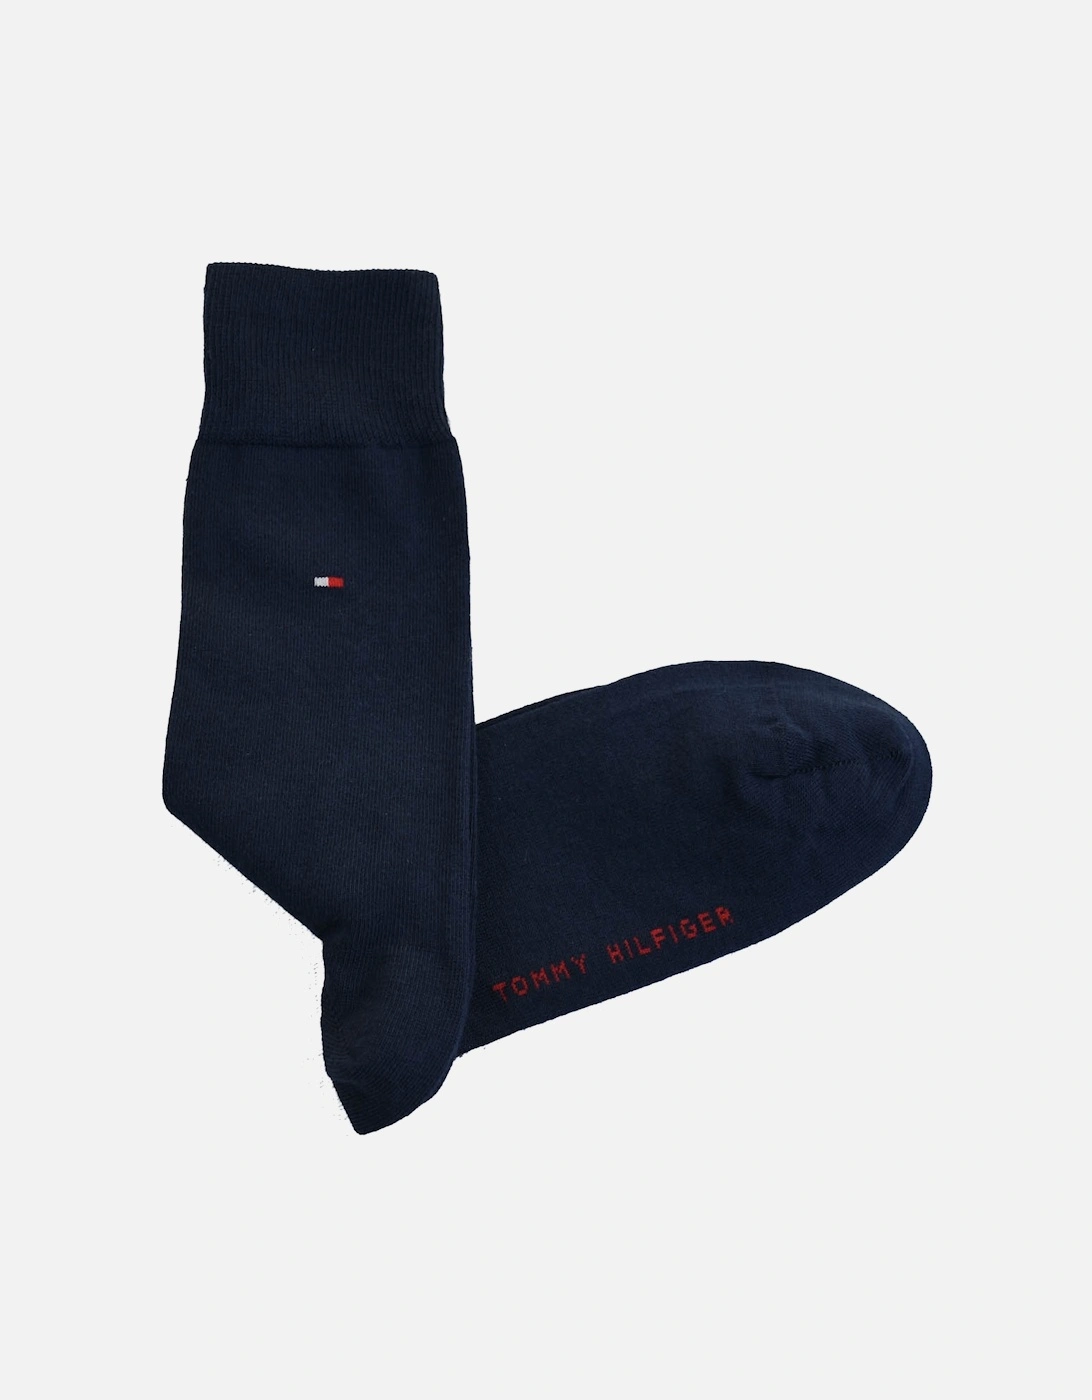 Mens Check 2pkt Socks (Navy/Red)